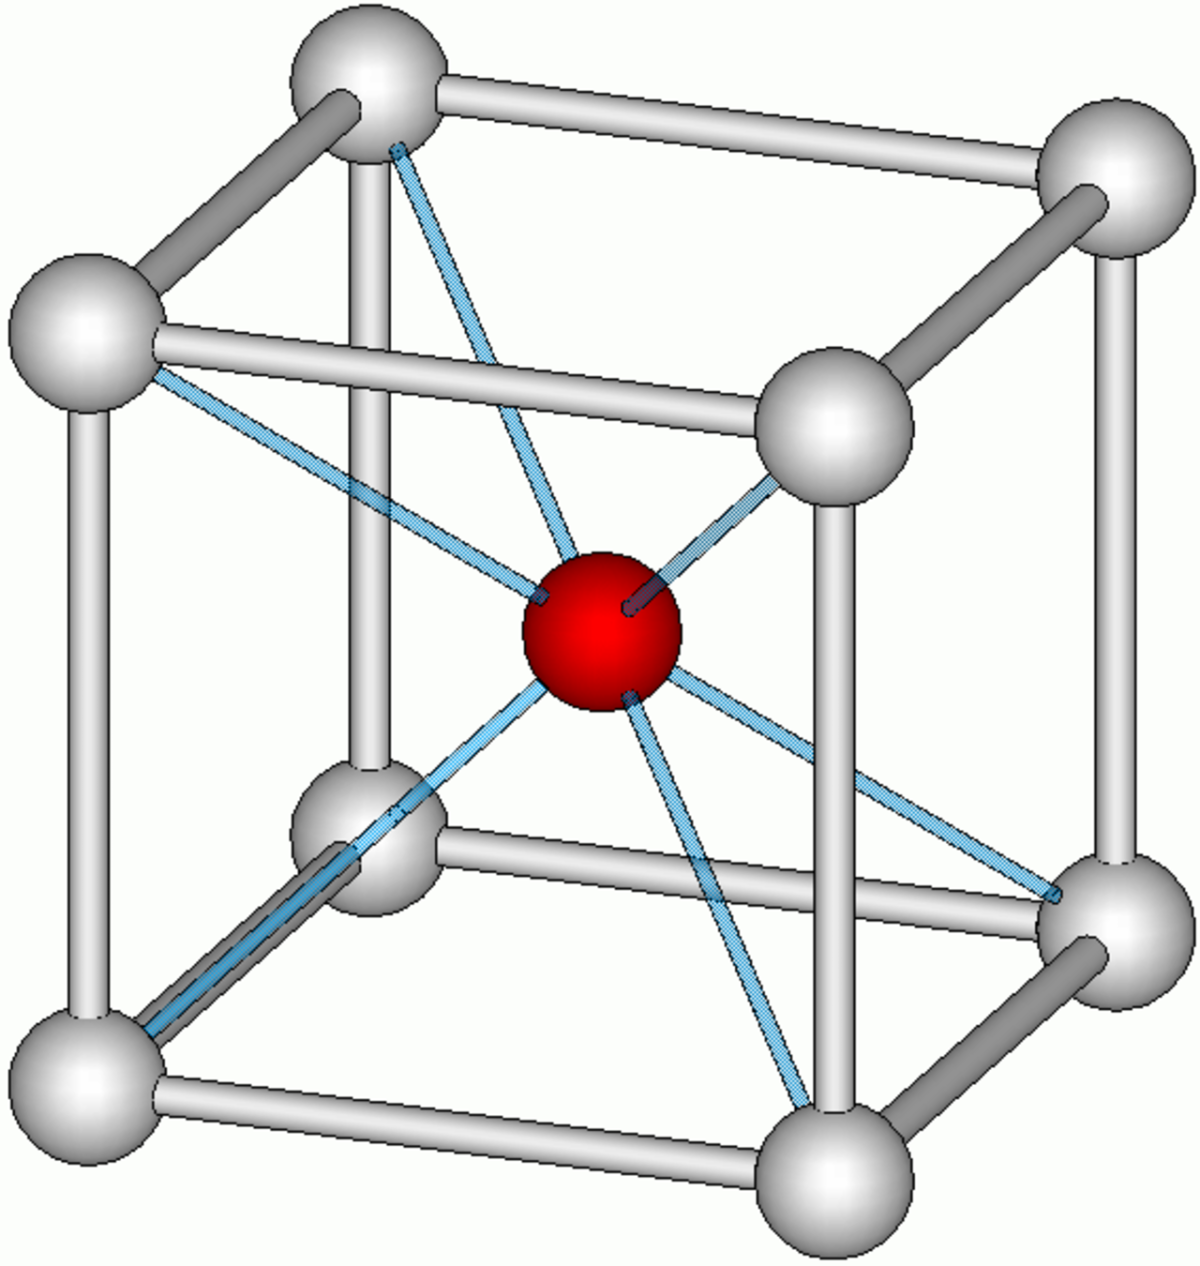 CSCL кристаллическая решетка. Кристаллическая структура CSCL. Решетка хлорида цезия. Элементарная ячейка ОЦК решетки. Хлорид натрия рисунок